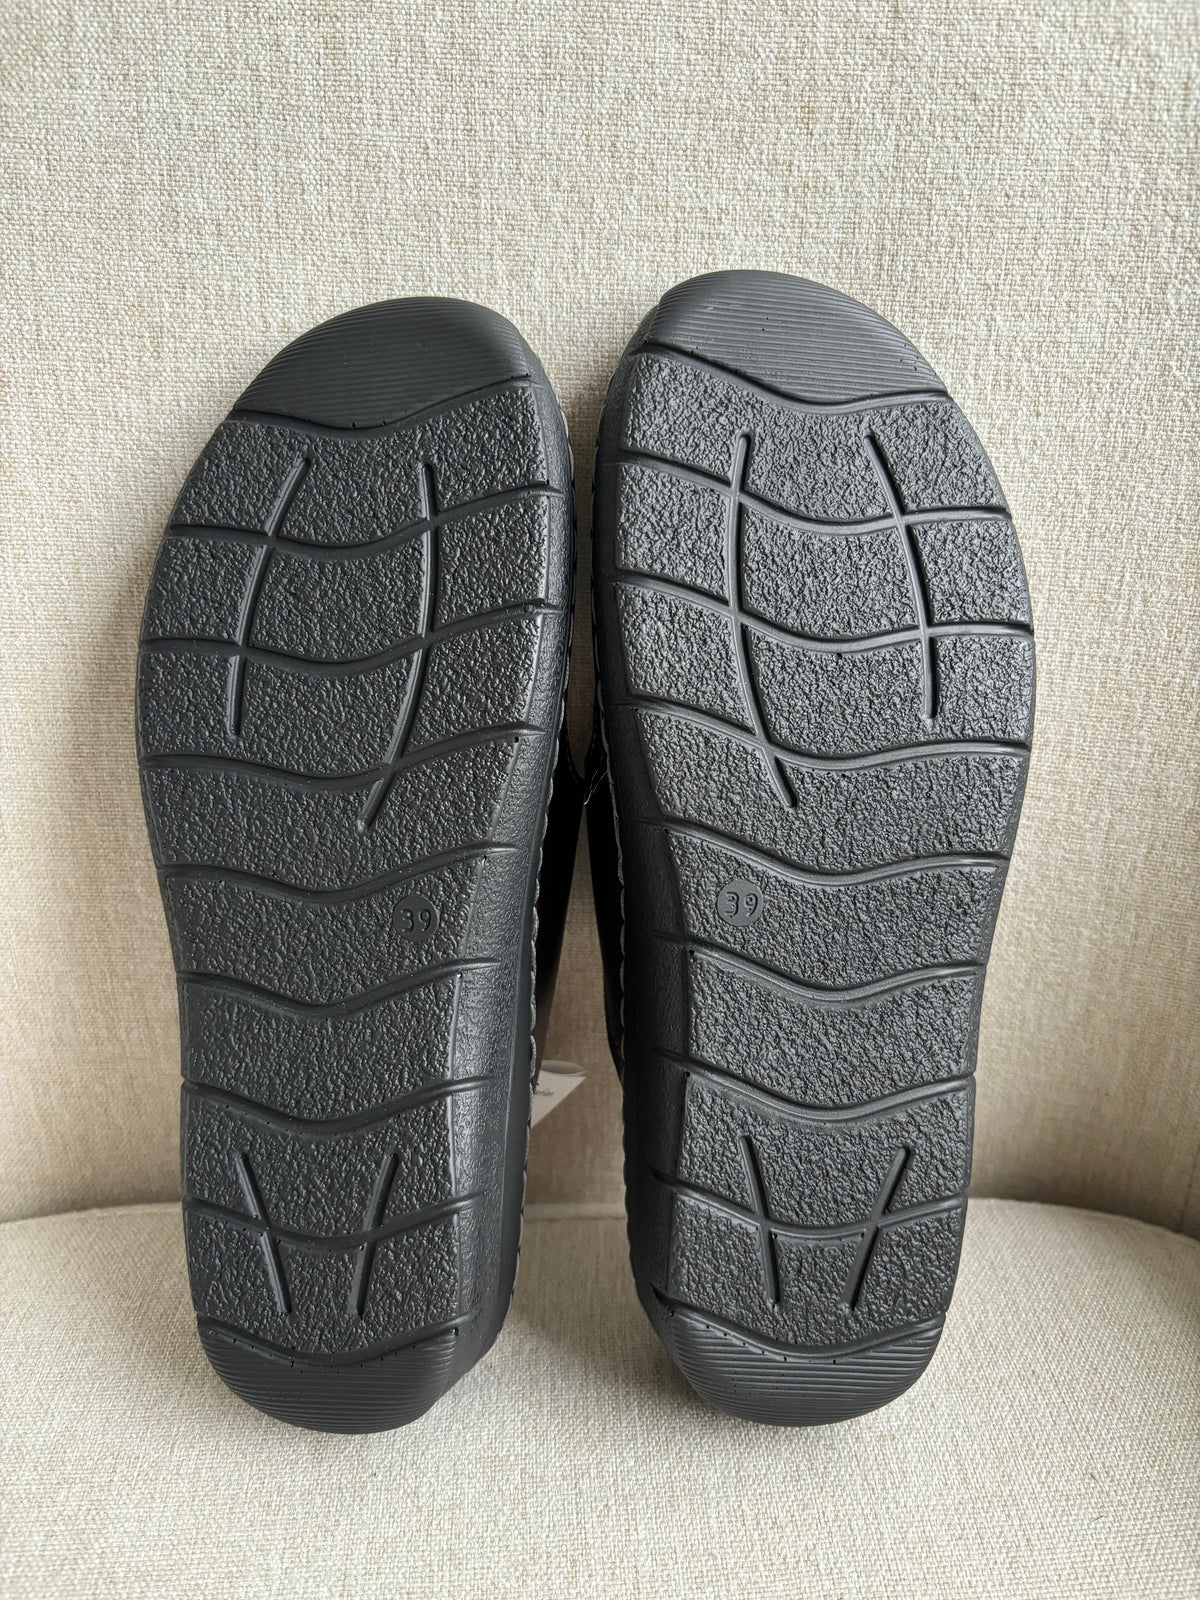 Handmade comfort sandals by Zonen5 Size 6 EU 39